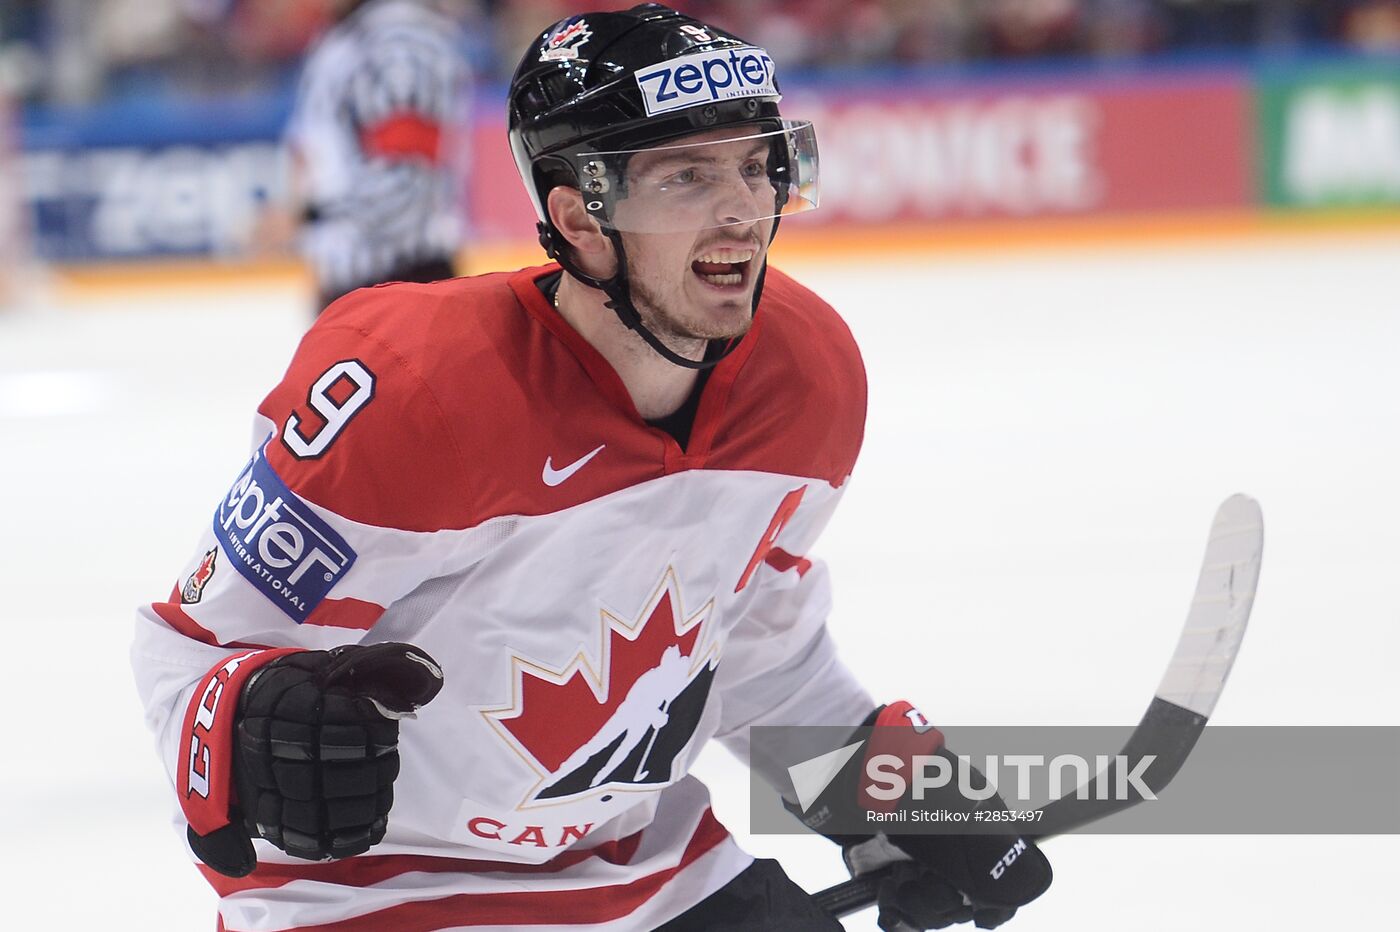 2016 IIHF World Ice Hockey Championship. Canada vs. USA